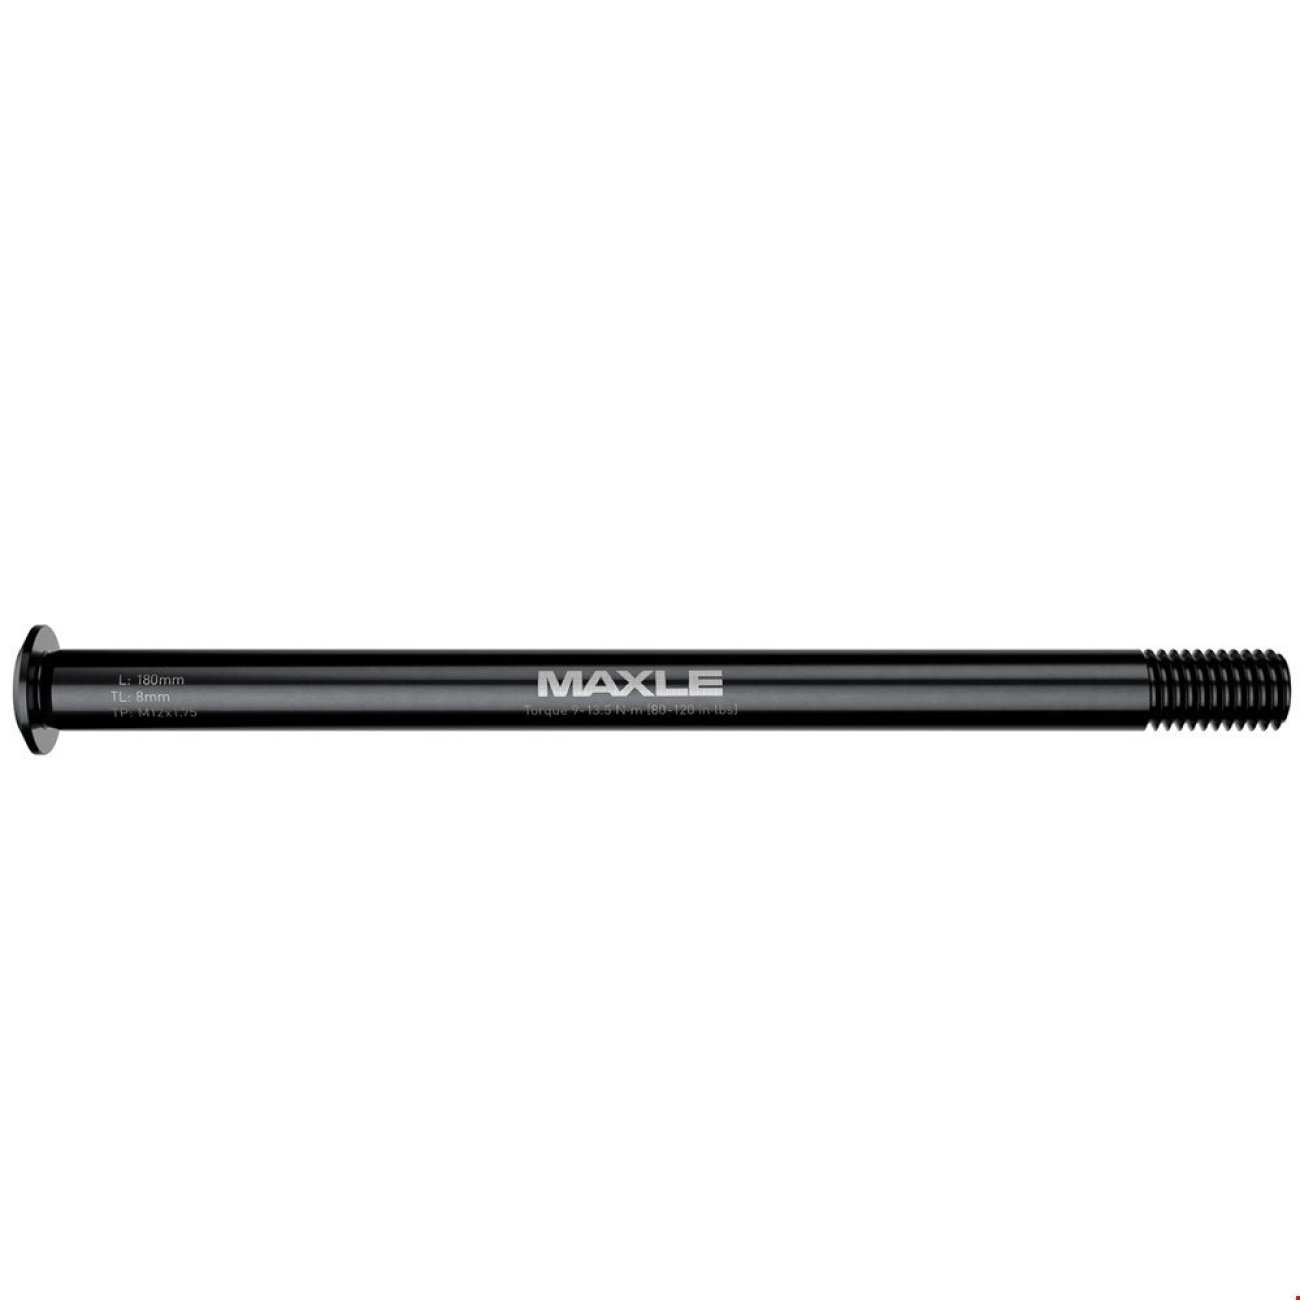 SRAM átütőtengely - MAXLE STEALTH 12x148 180mm - Fekete